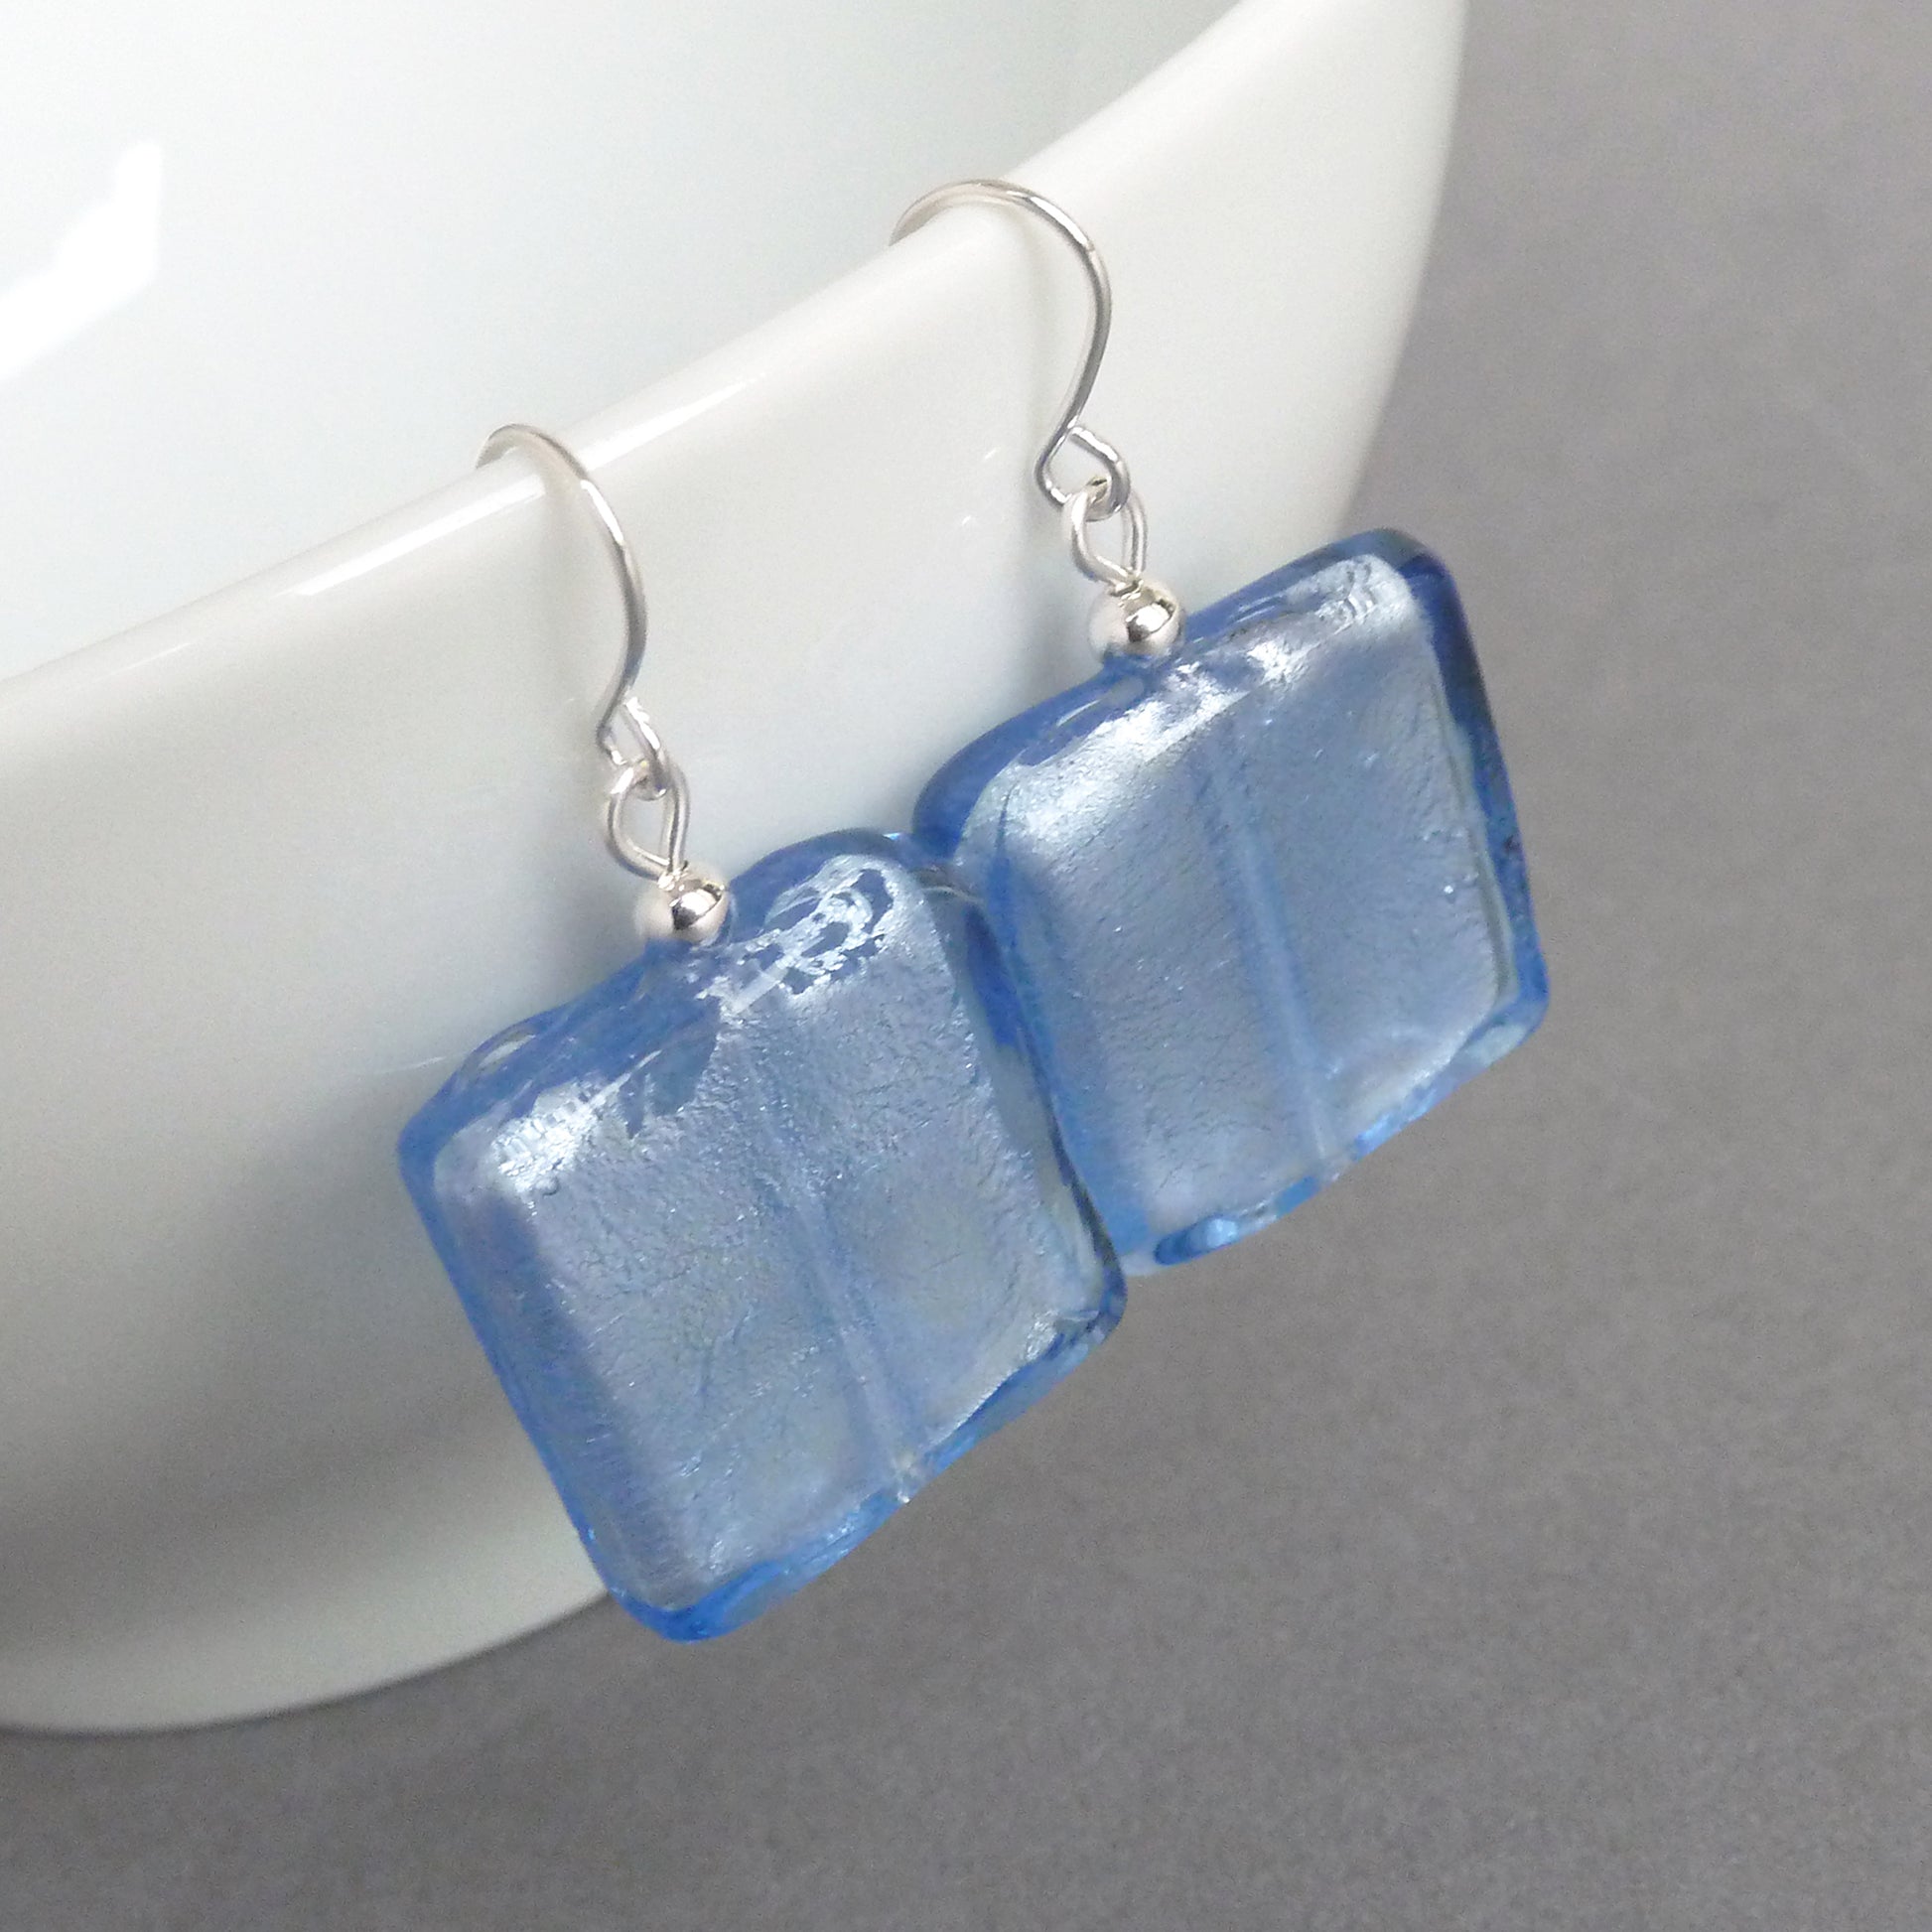 Square pale blue dangle earrings